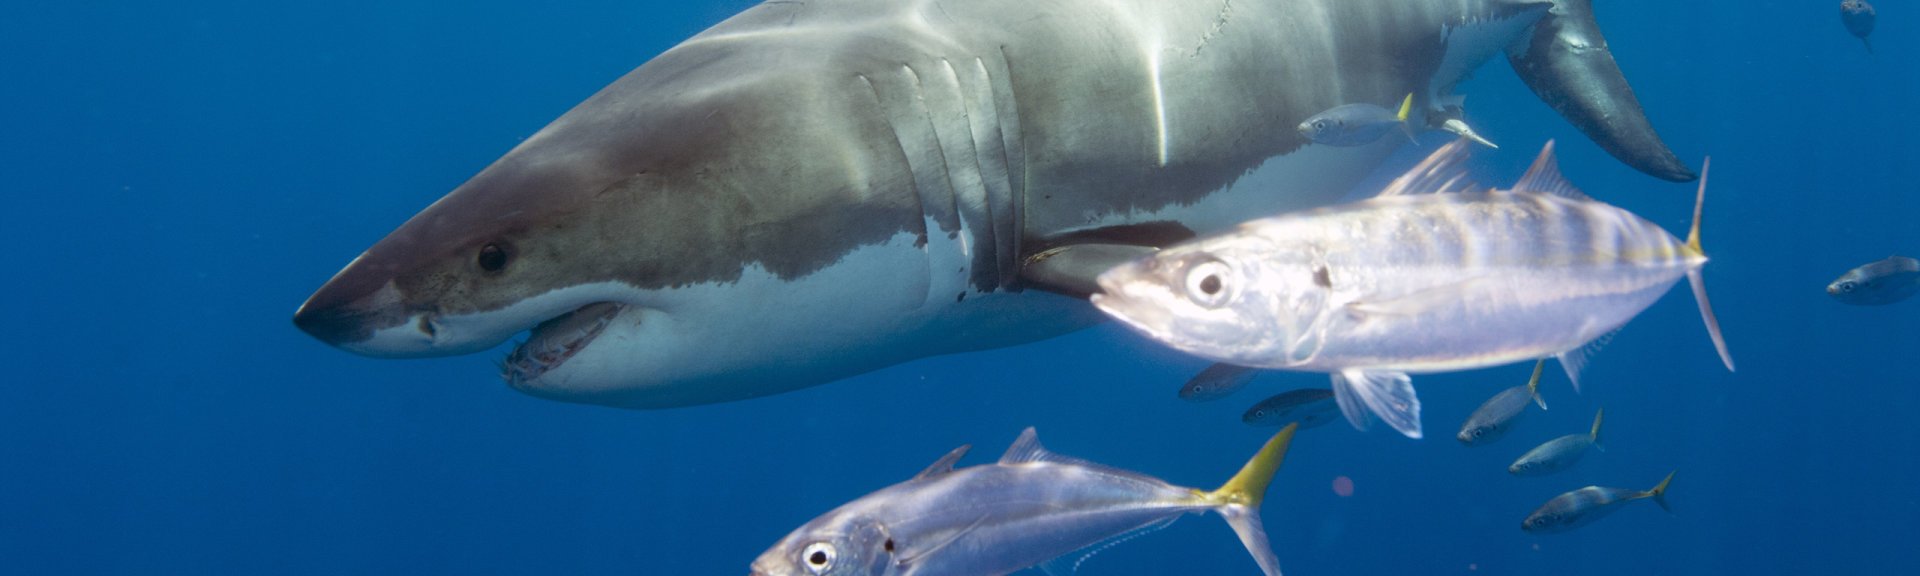 White shark swimming alongside a school of Pacific Jack mackerel